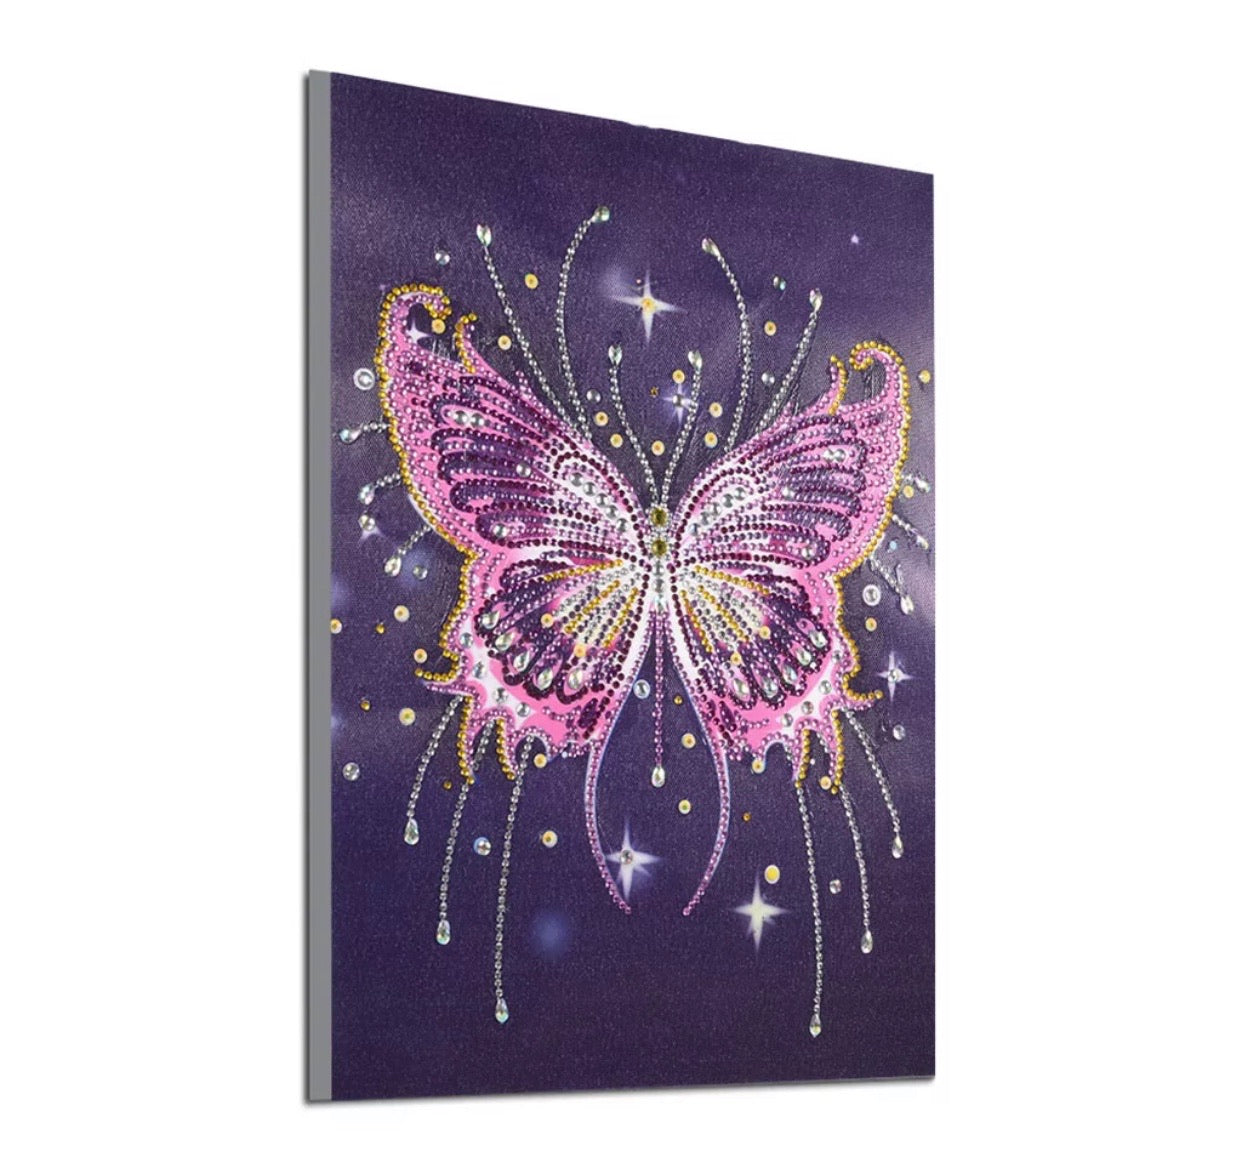 30 x 40 diamond painting (rhinestone) DZ099 purple butterfly